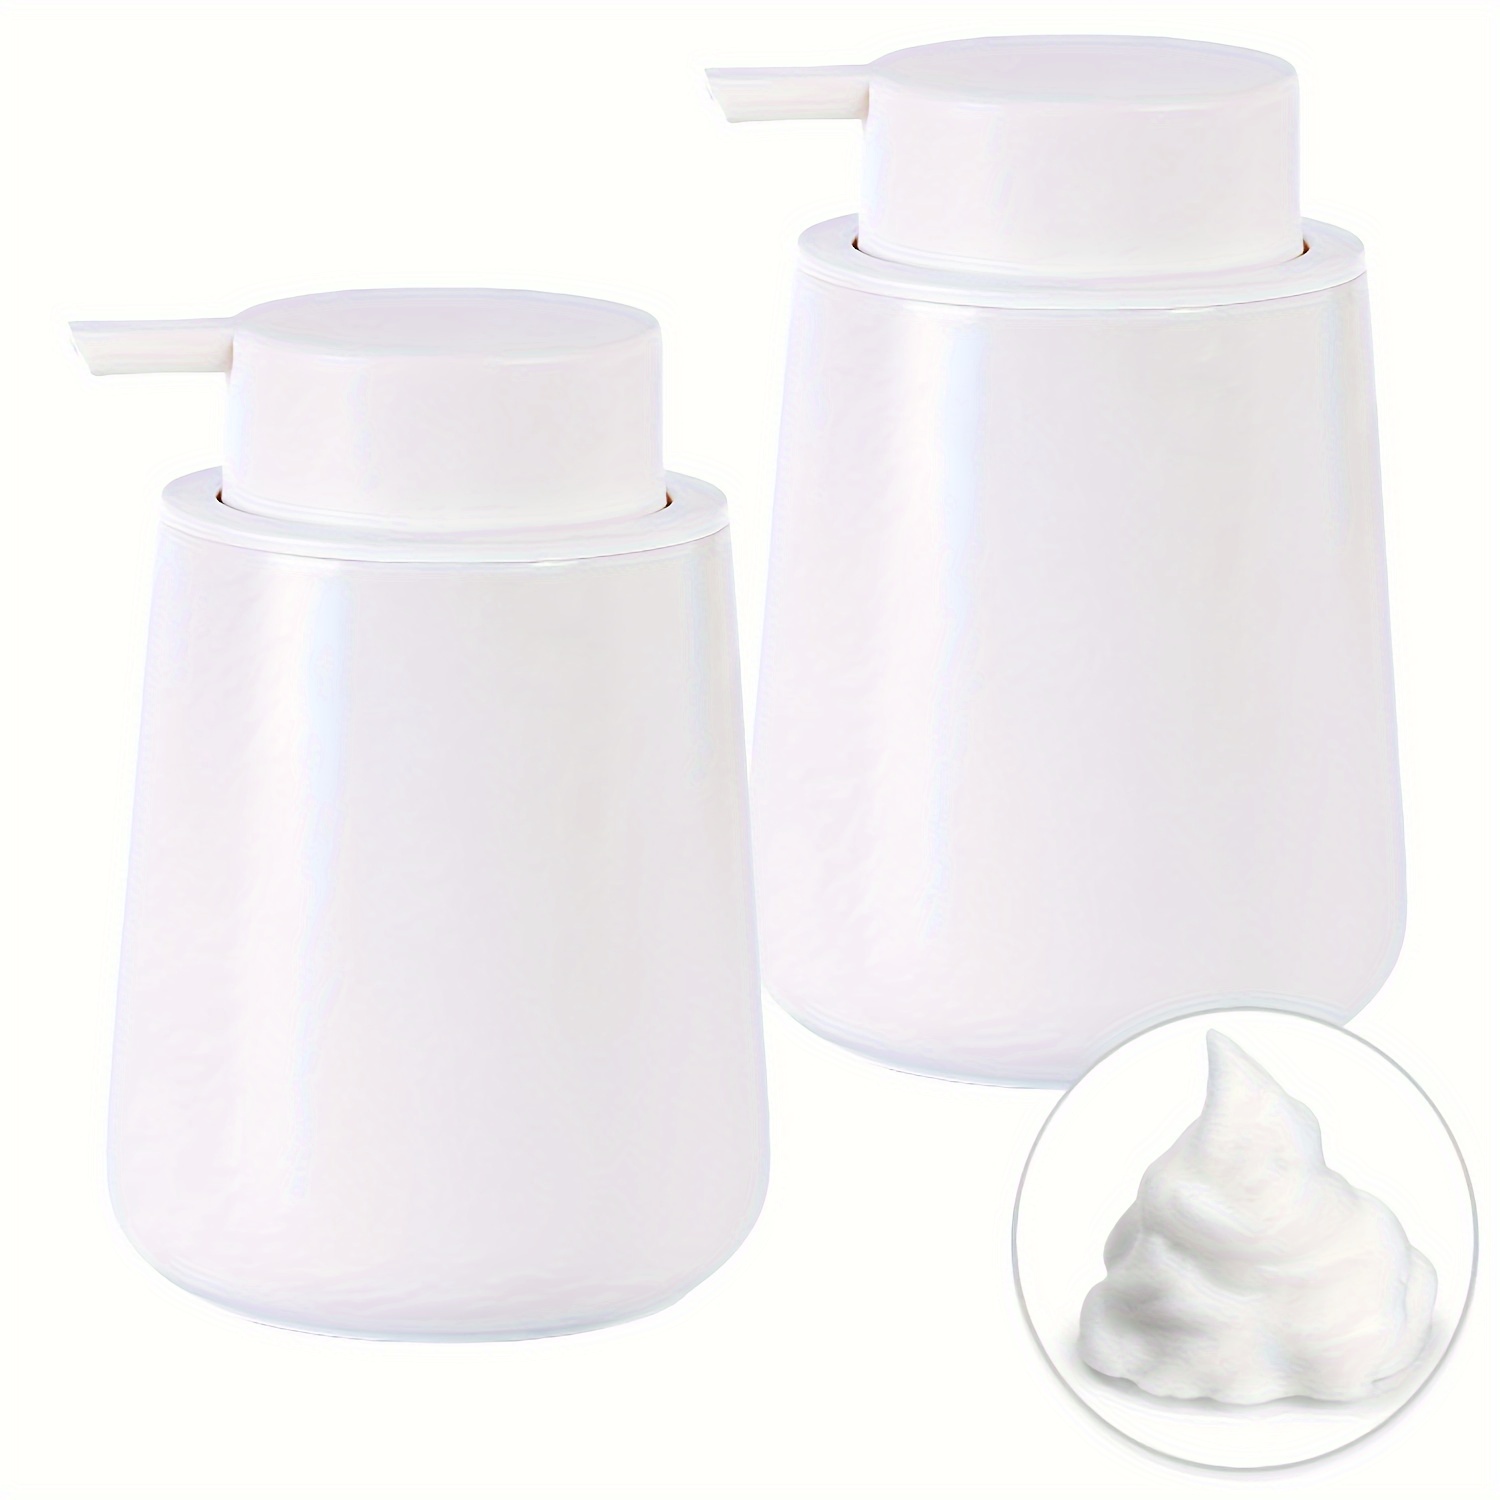 Foam Dispenser 12 oz, Ceramic Hand Pump Dispenser Beige Foaming Soap  Dispenser Dish Liquid Dispenser for Kitchen Bathroom Hand Wash Bottle